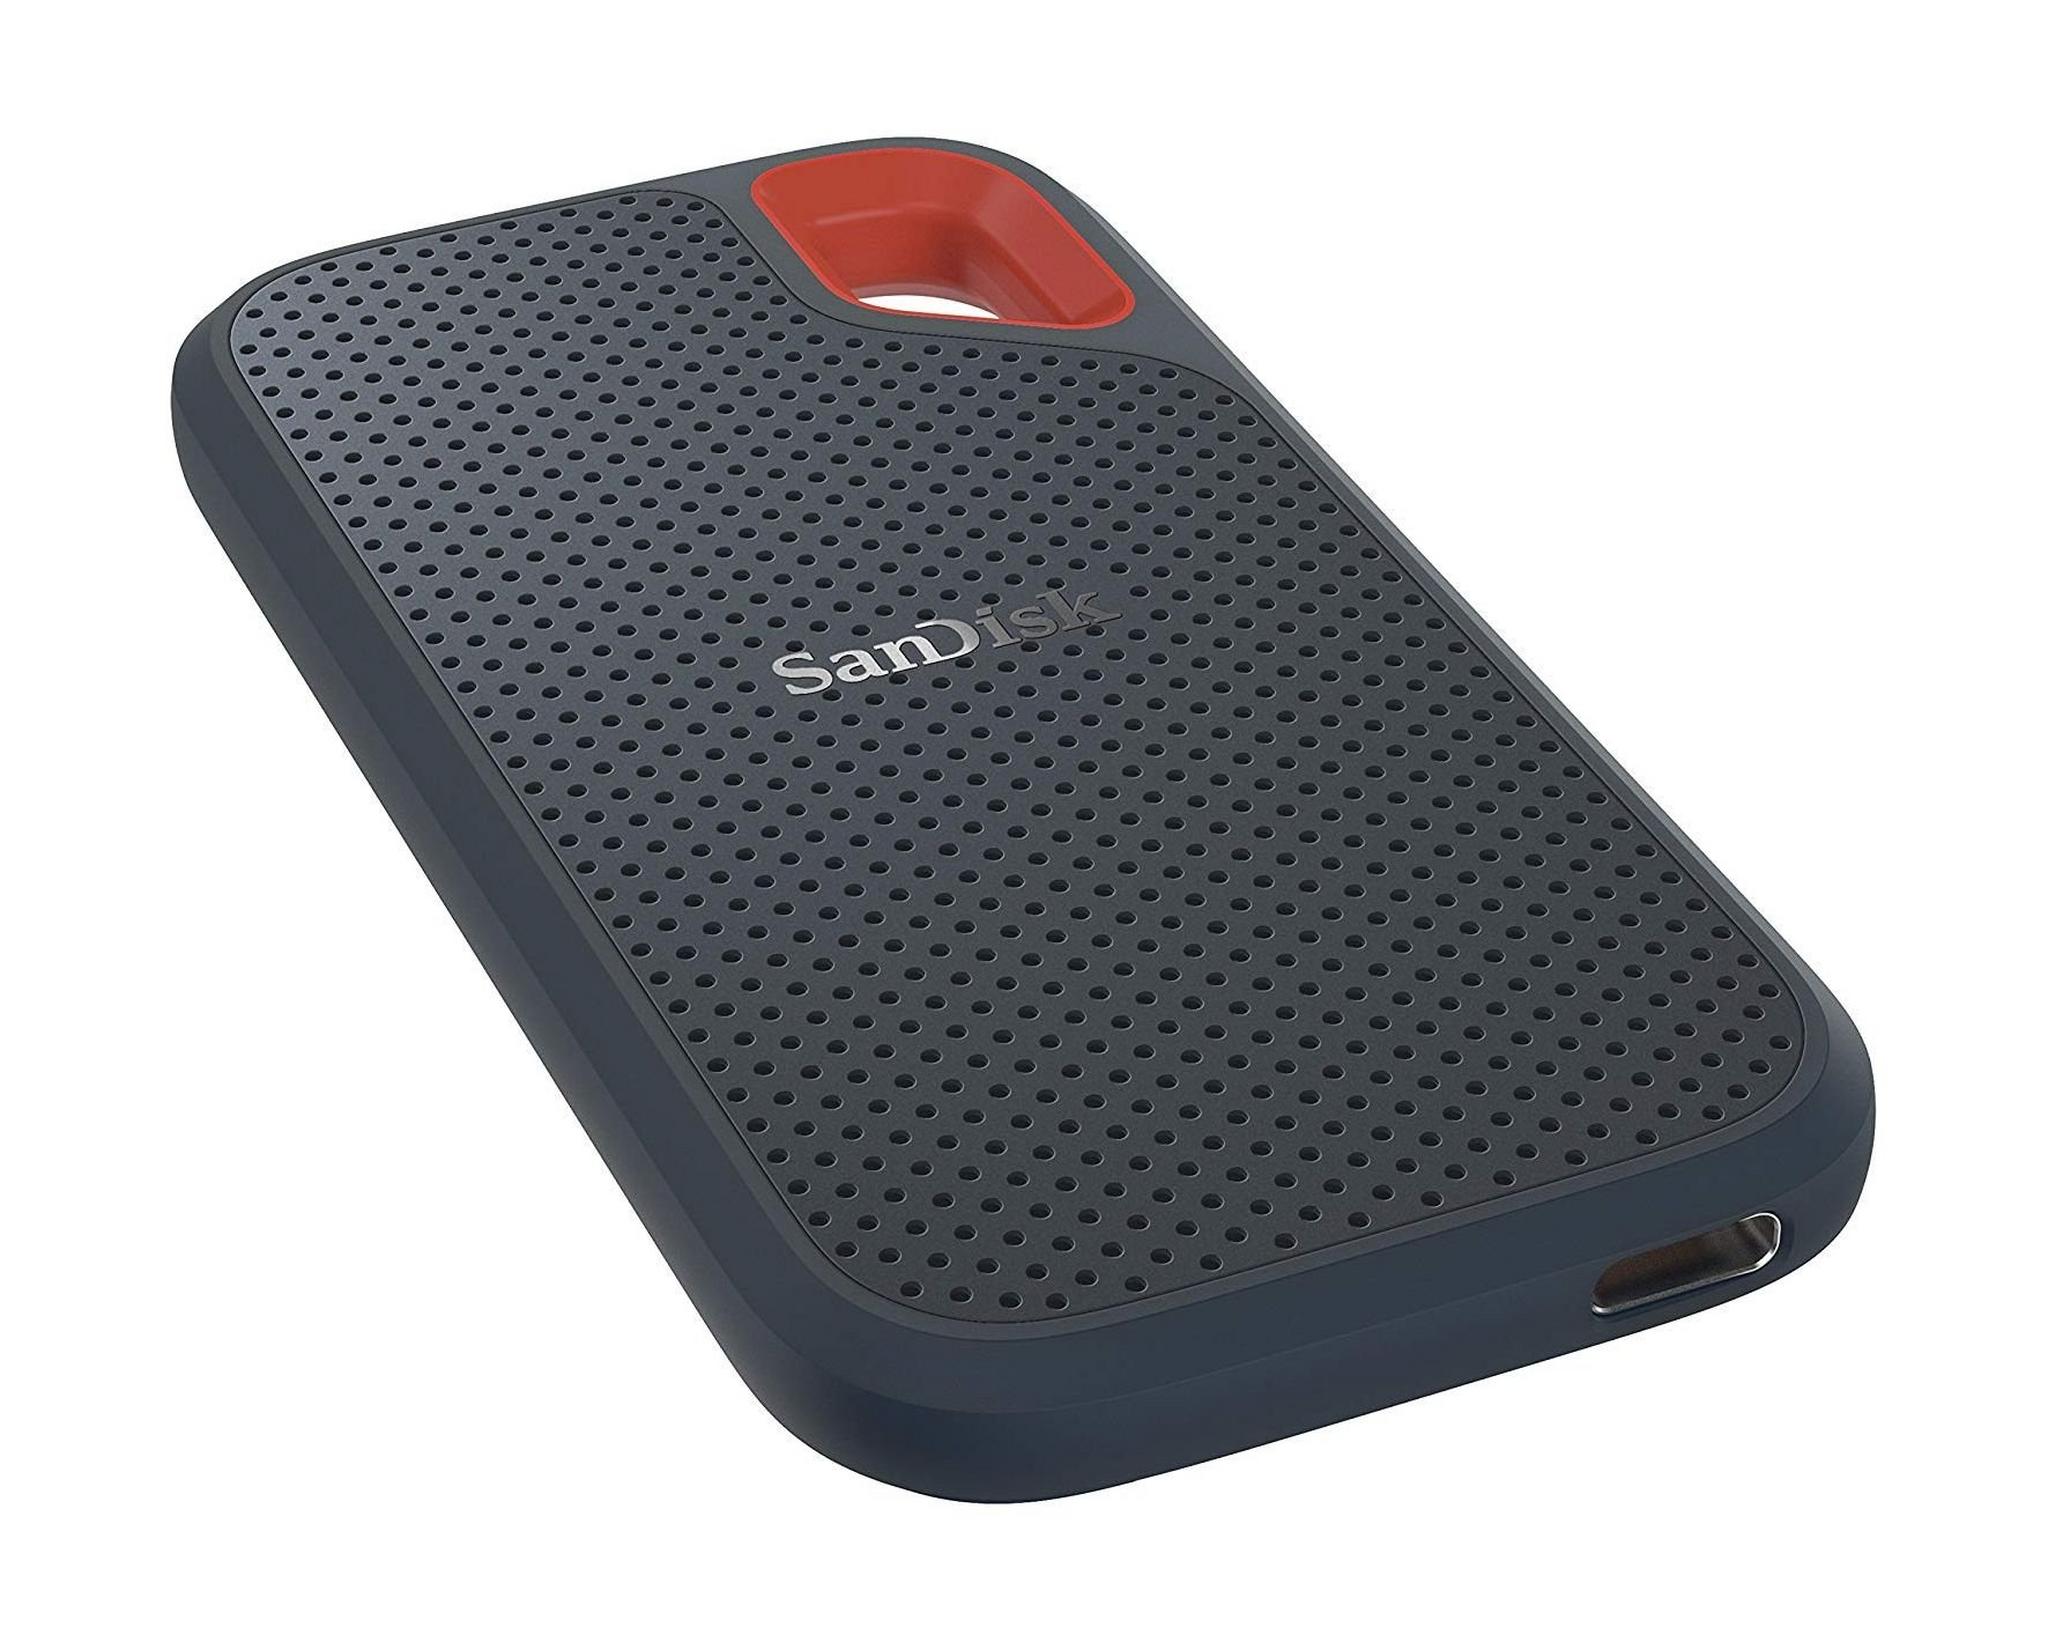 SanDisk Extreme Portable External SSD - 2TB